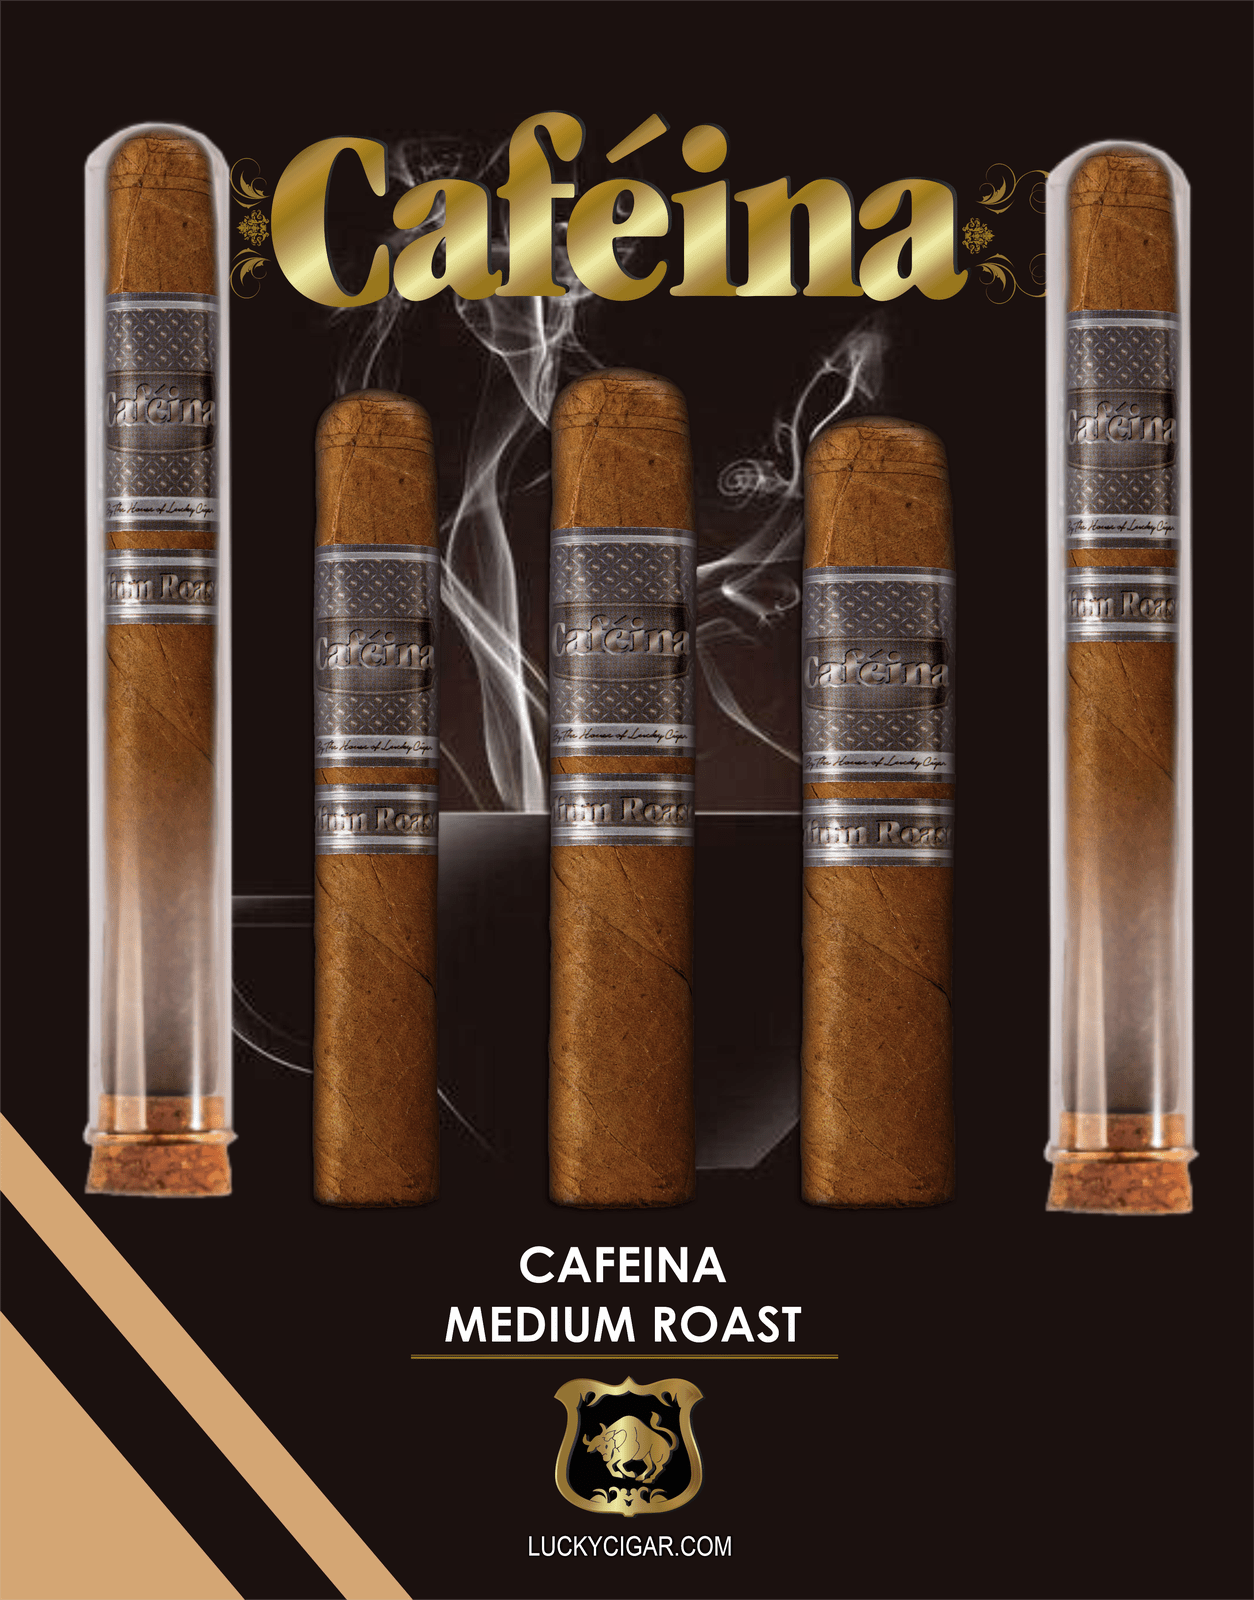 Infused Cigars: Set of 5 - 2 Cafeina Dark 6x50 Tubes and 3 Medium Roast 5x58 Cigars